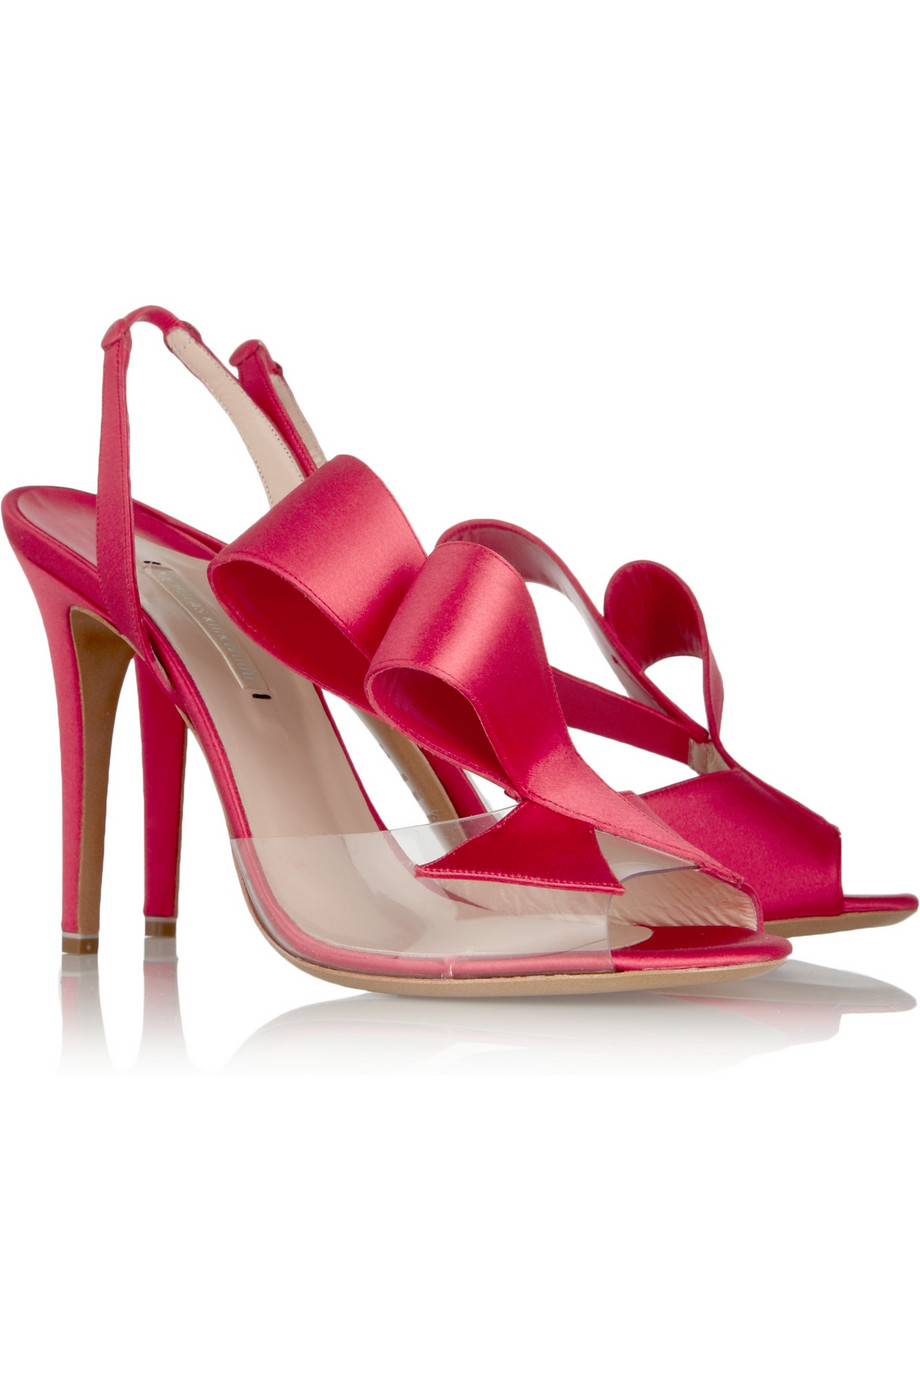 Nicholas Kirkwood Wovensilk Sandals in Bright Pink (Pink) - Lyst